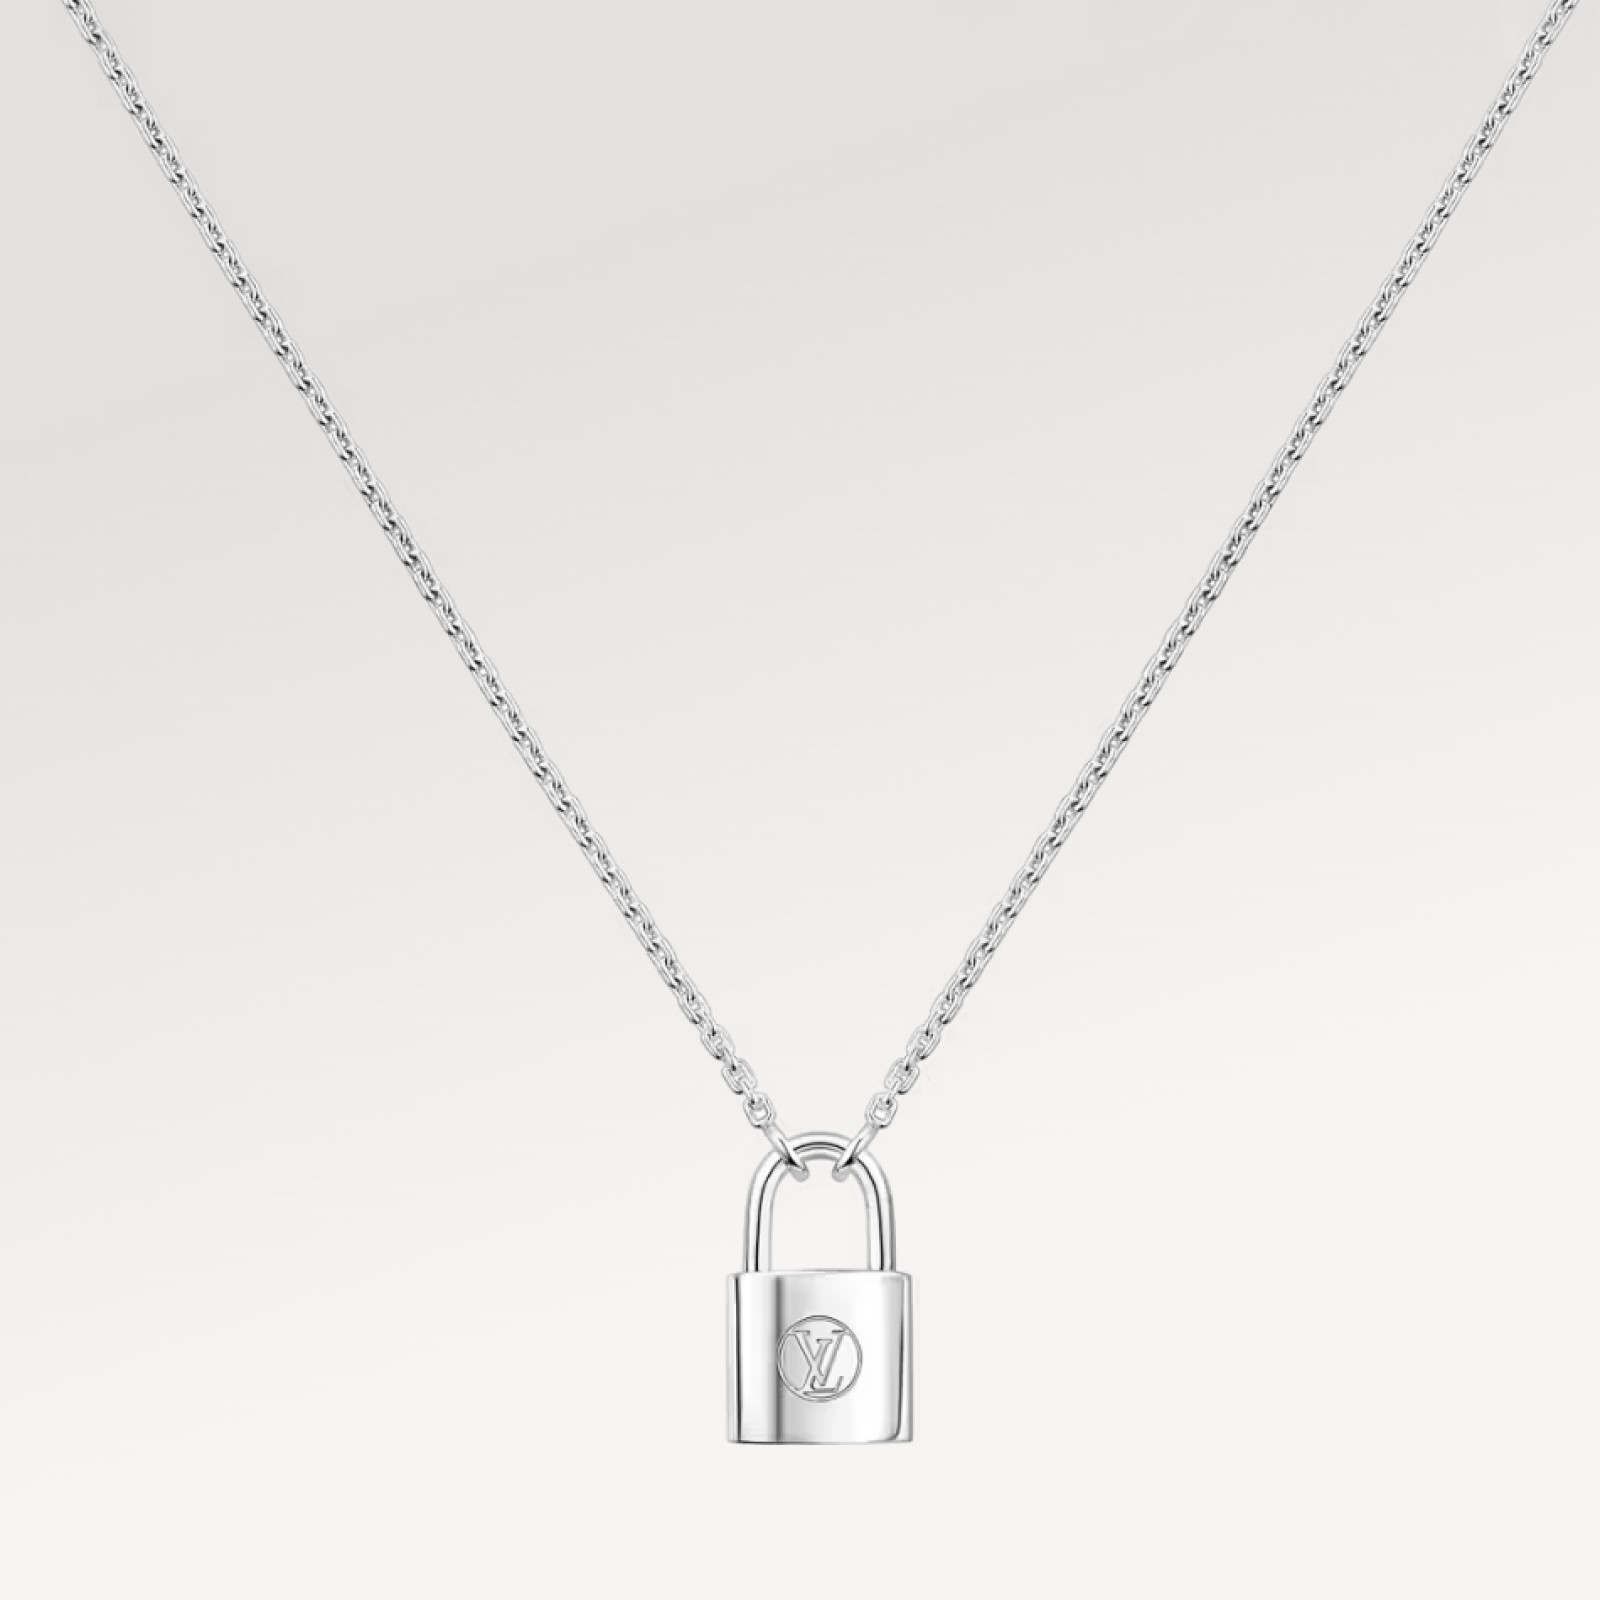 Silver Lockit pendant, sterling silver